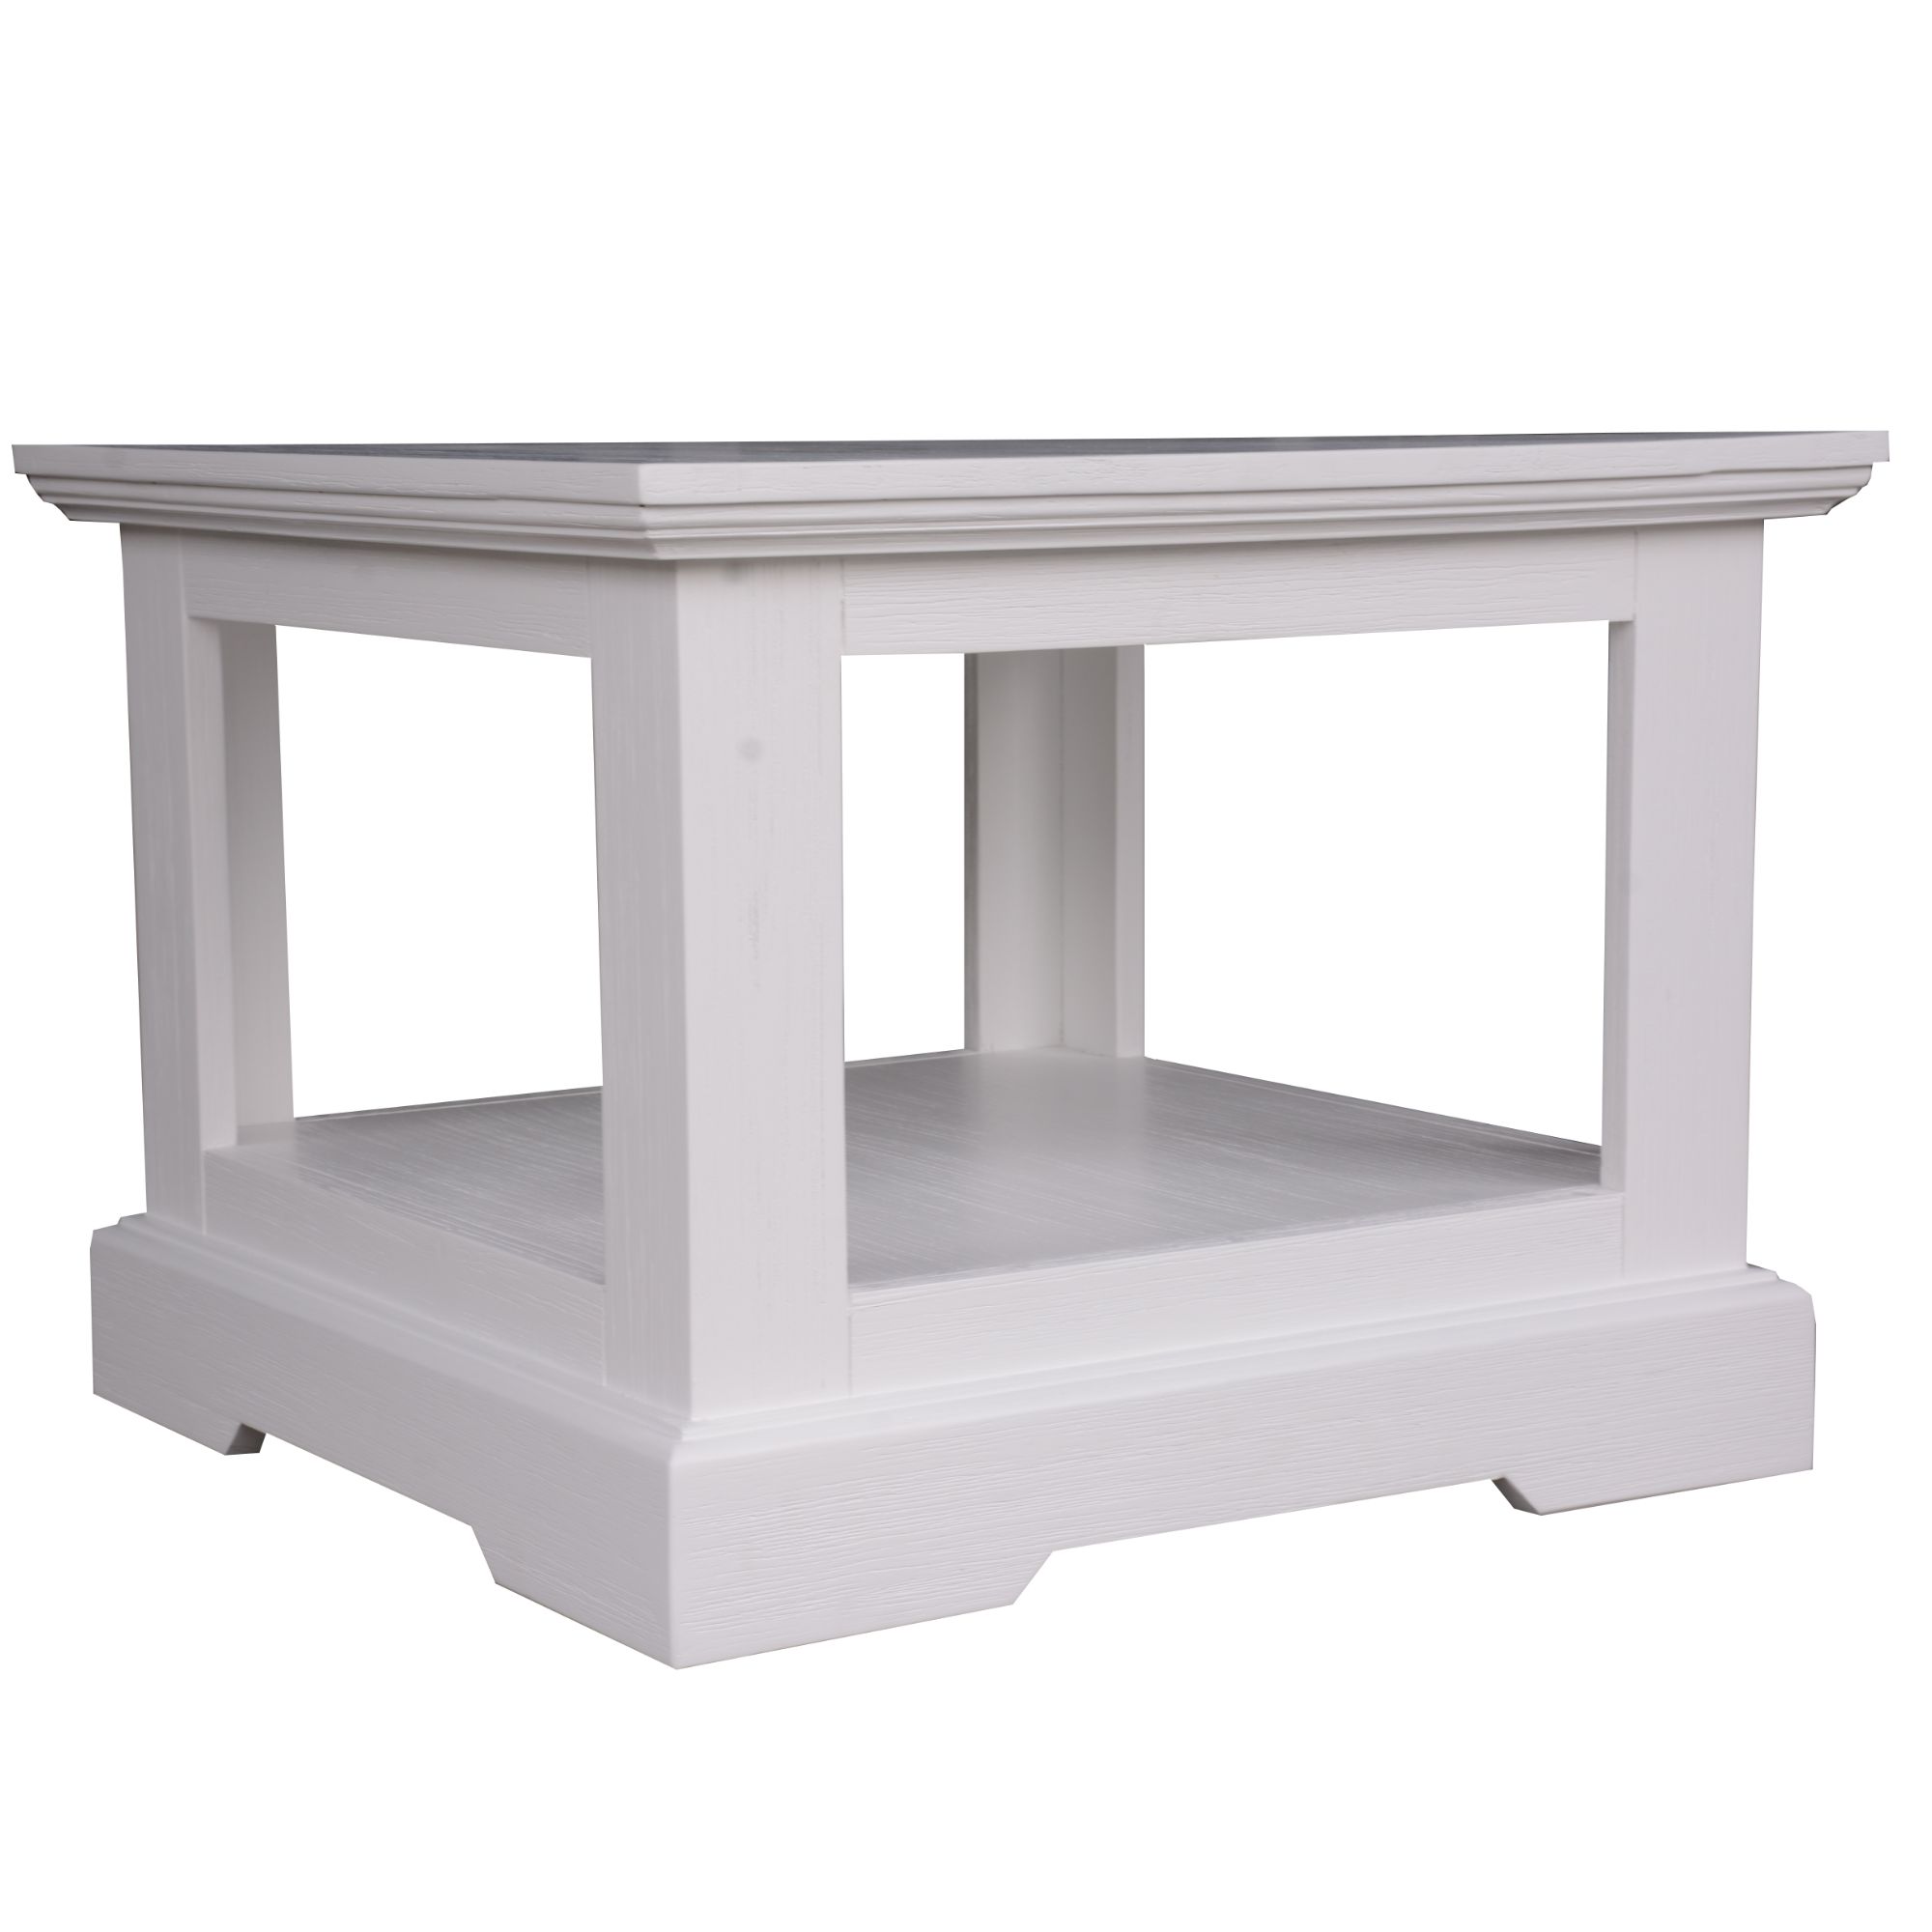 Laelia Lamp Side Table 60cm Solid Acacia Timber Wood Coastal Furniture – White